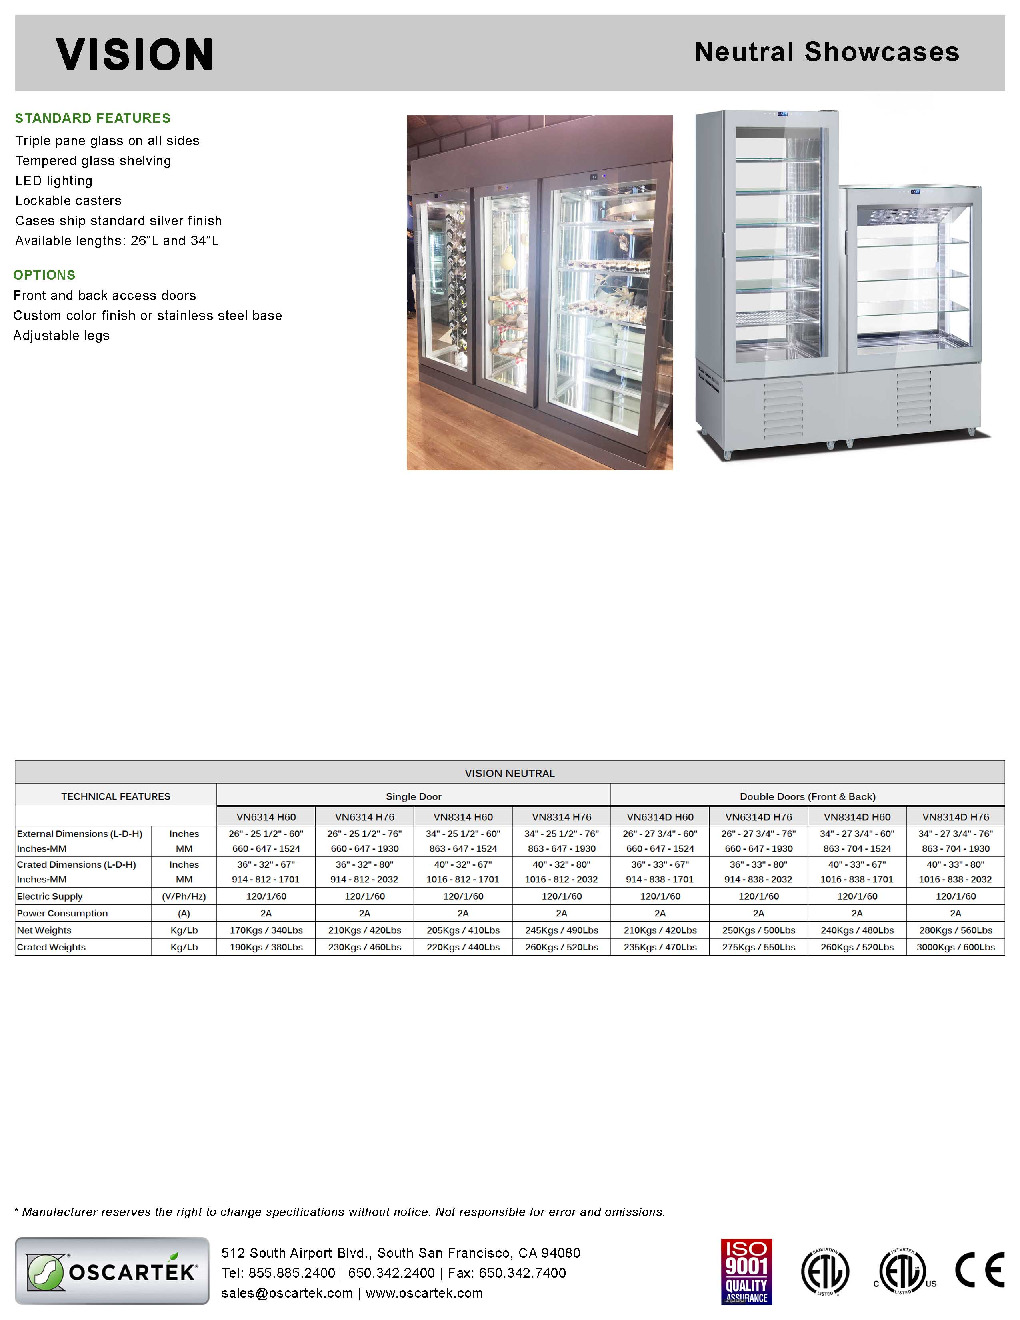 Oscartek VISION VN8314 H76 Non-Refrigerated Bakery Display Case